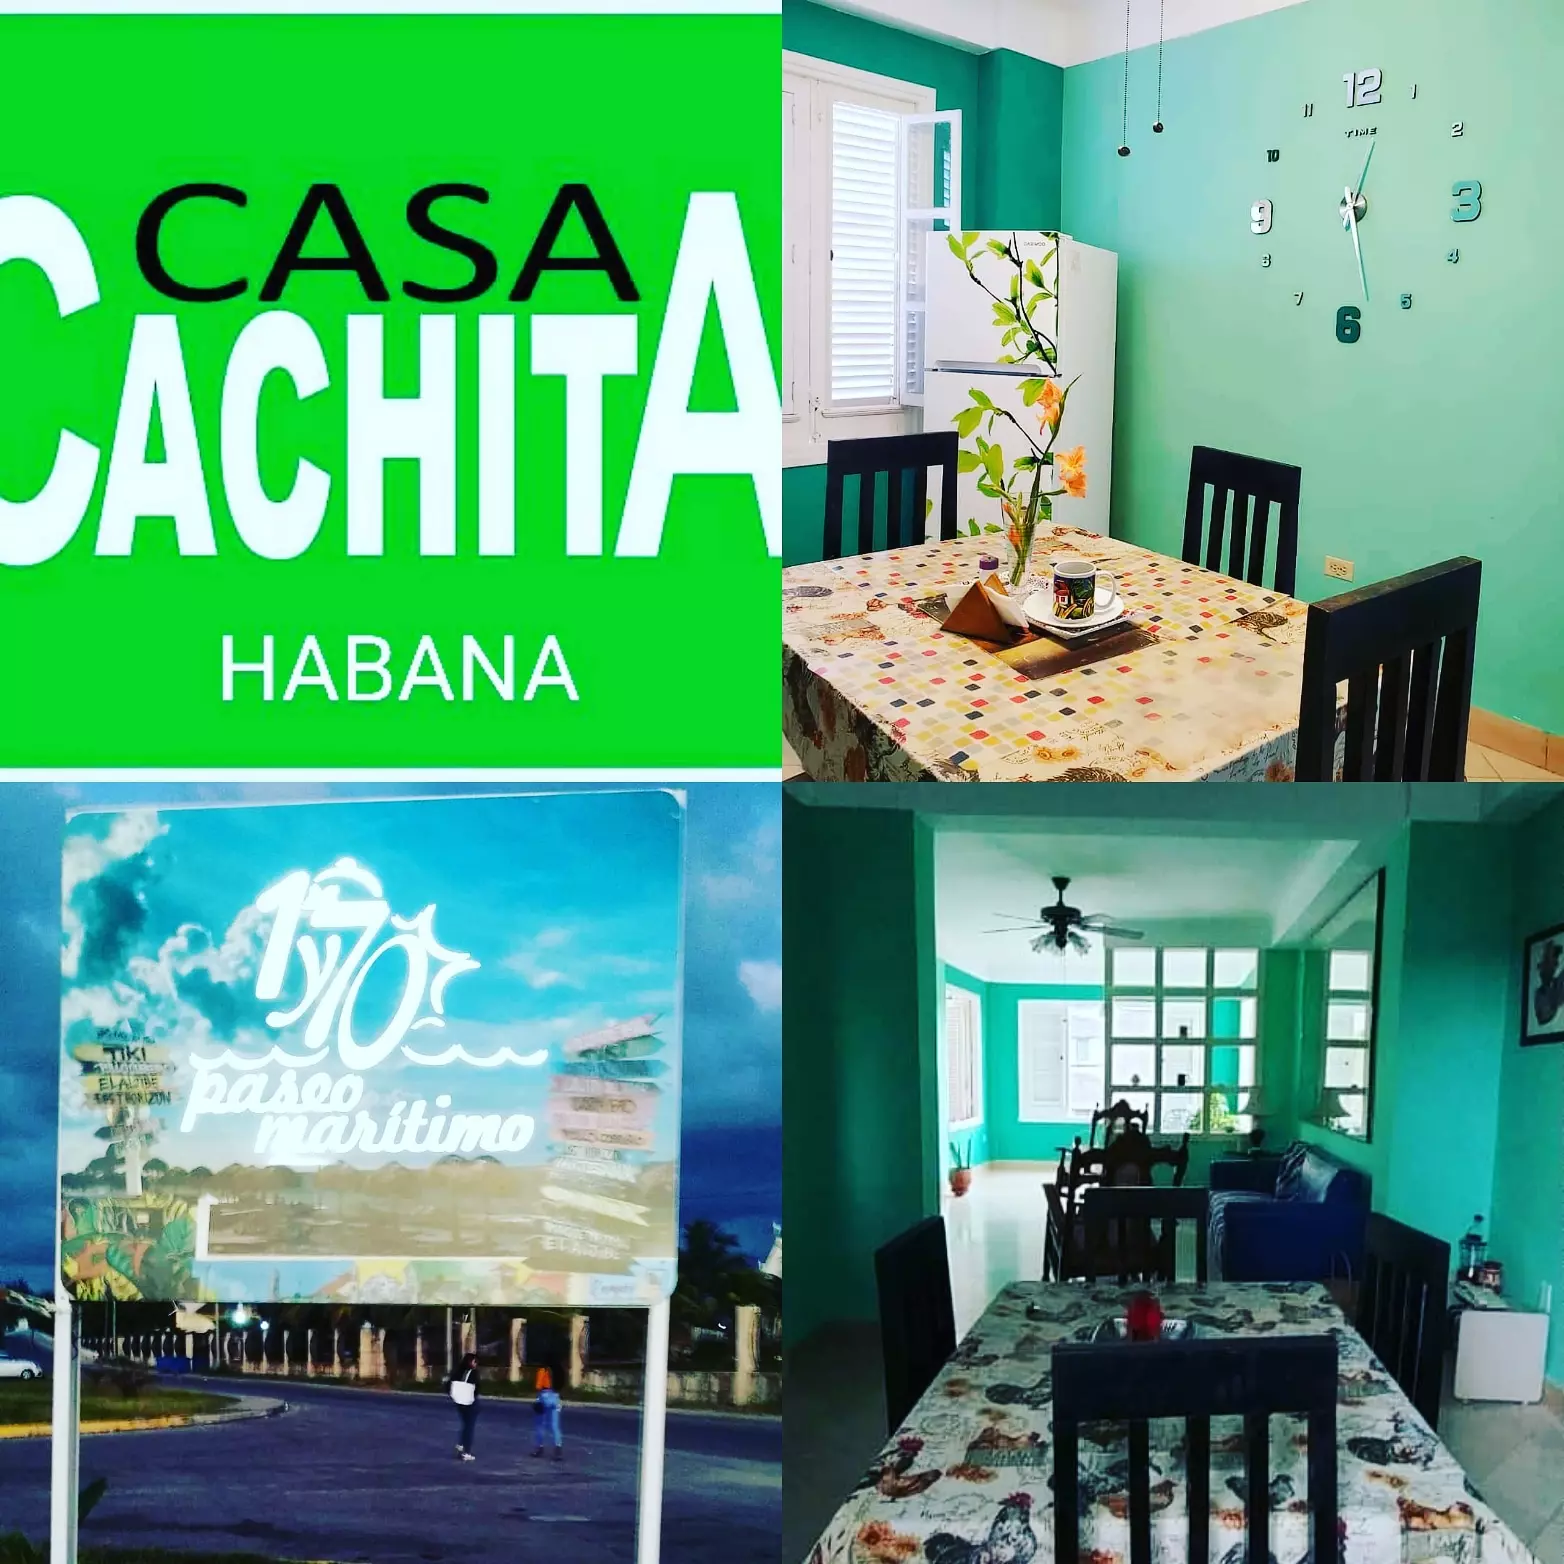 Casa Cachita Habana